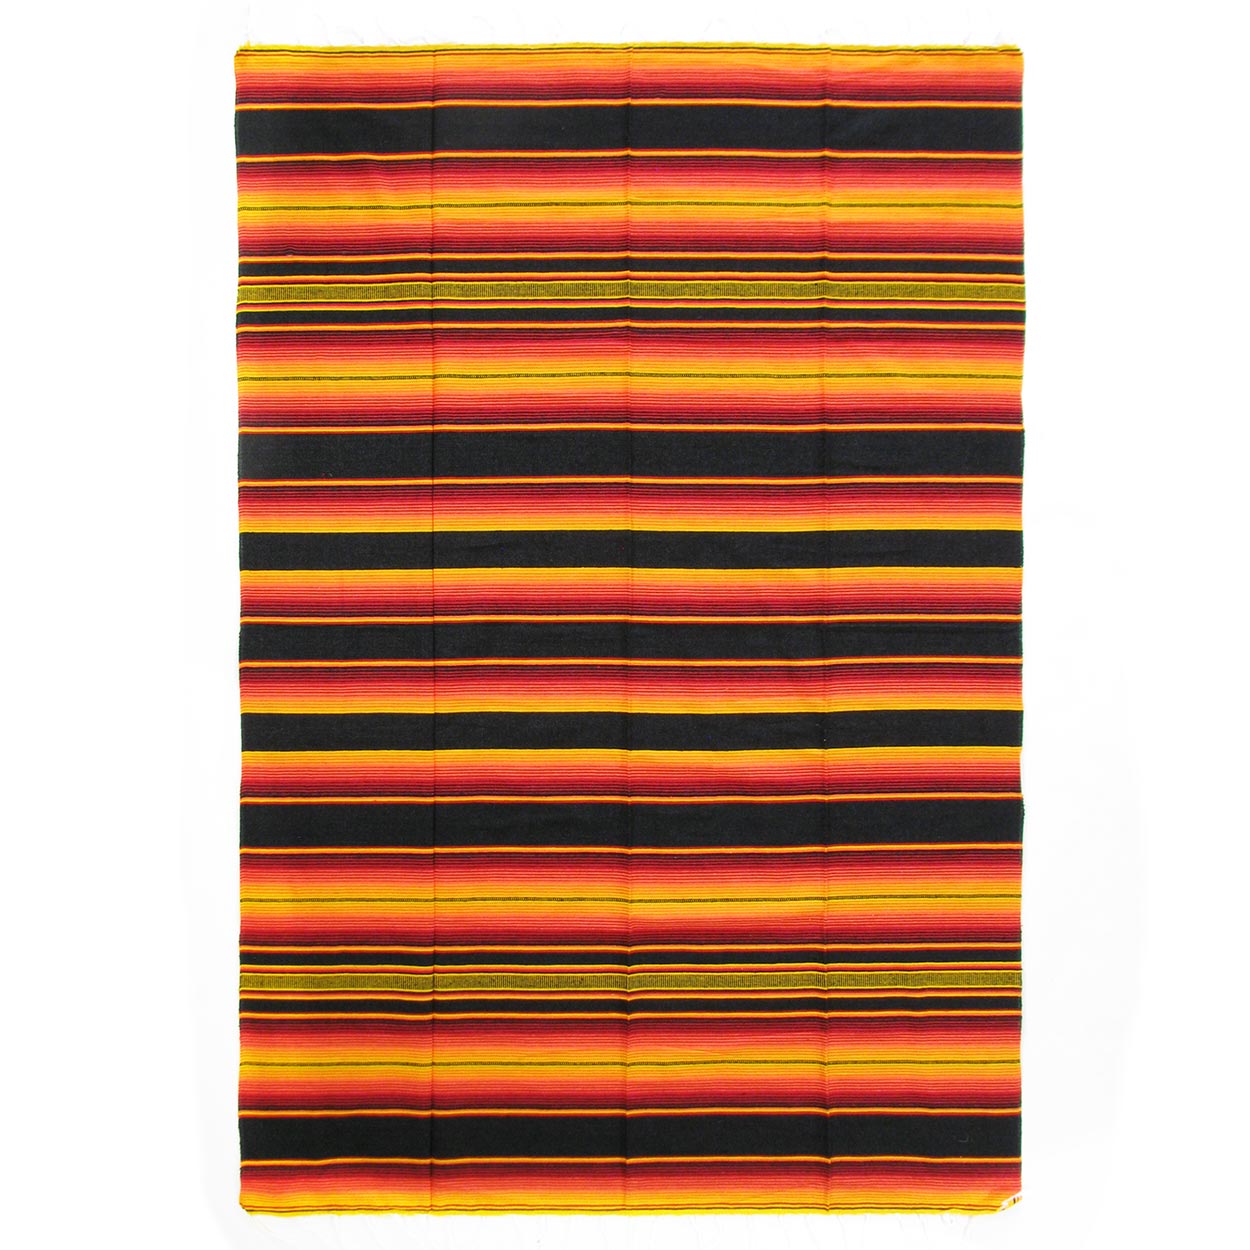 460408 - 60in x 84in Serape Blanket - Shades Of Orange With Black